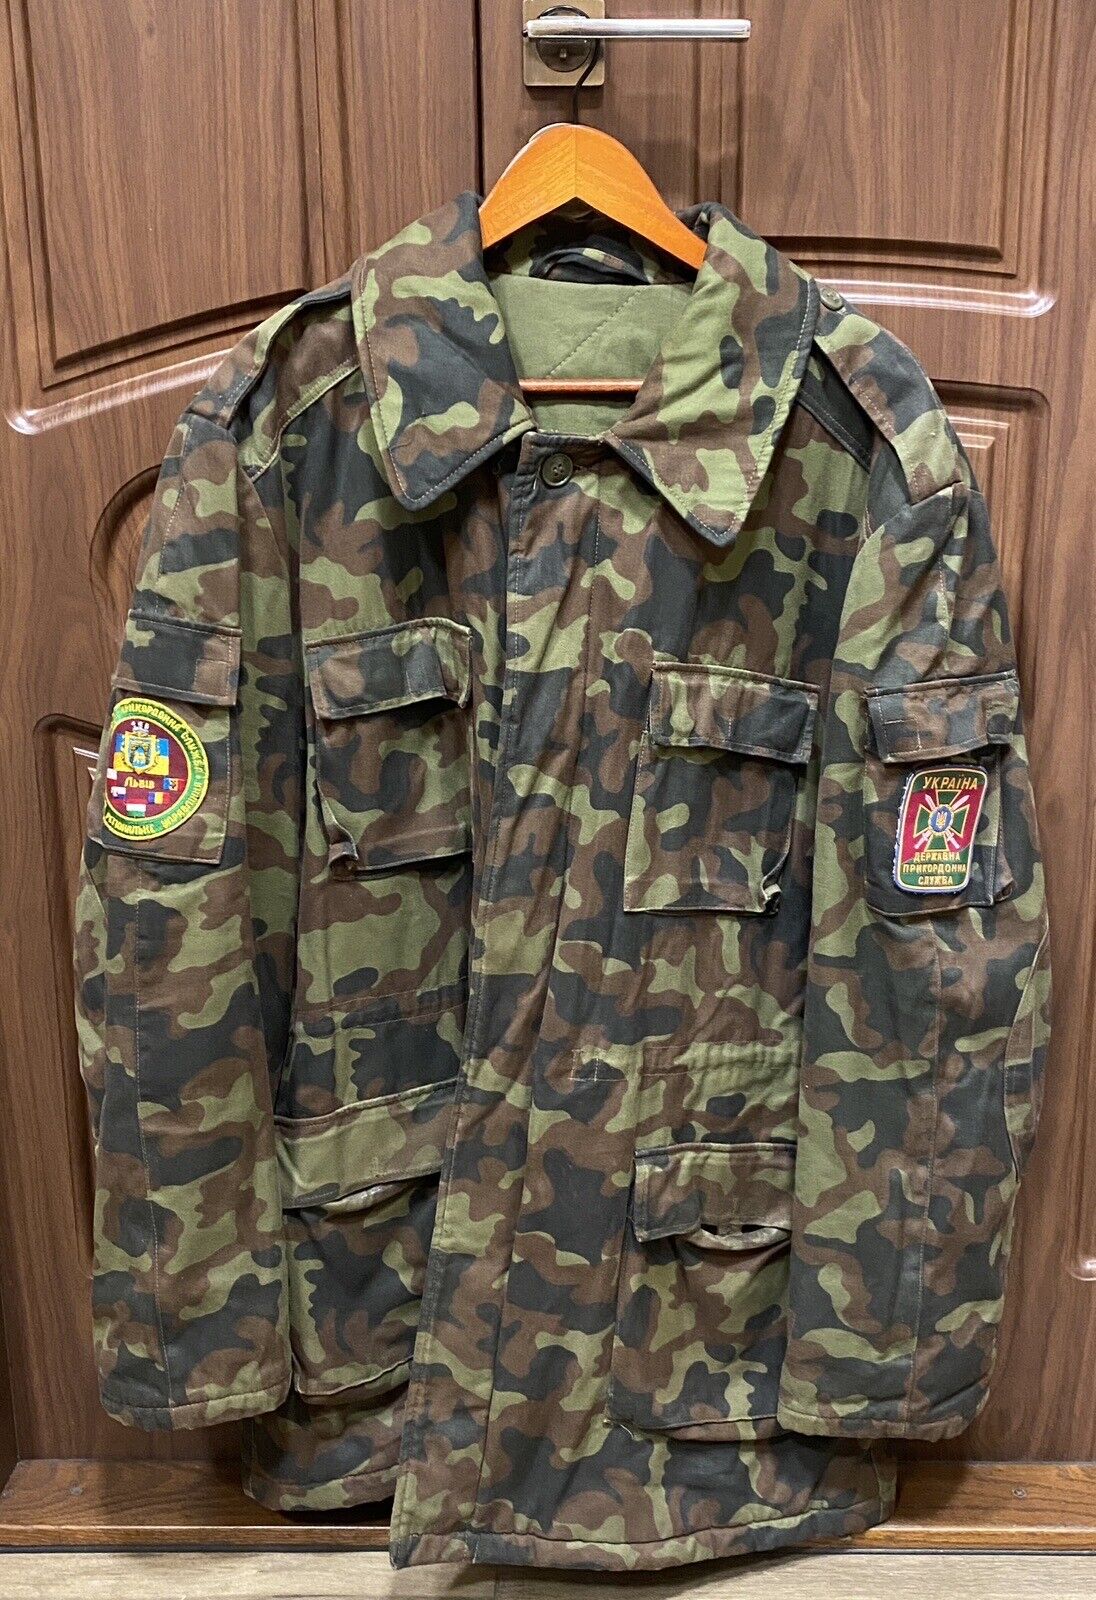 Soviet Military Uniform Cold Weather Jacket State Border Guard of Ukraine, 80's